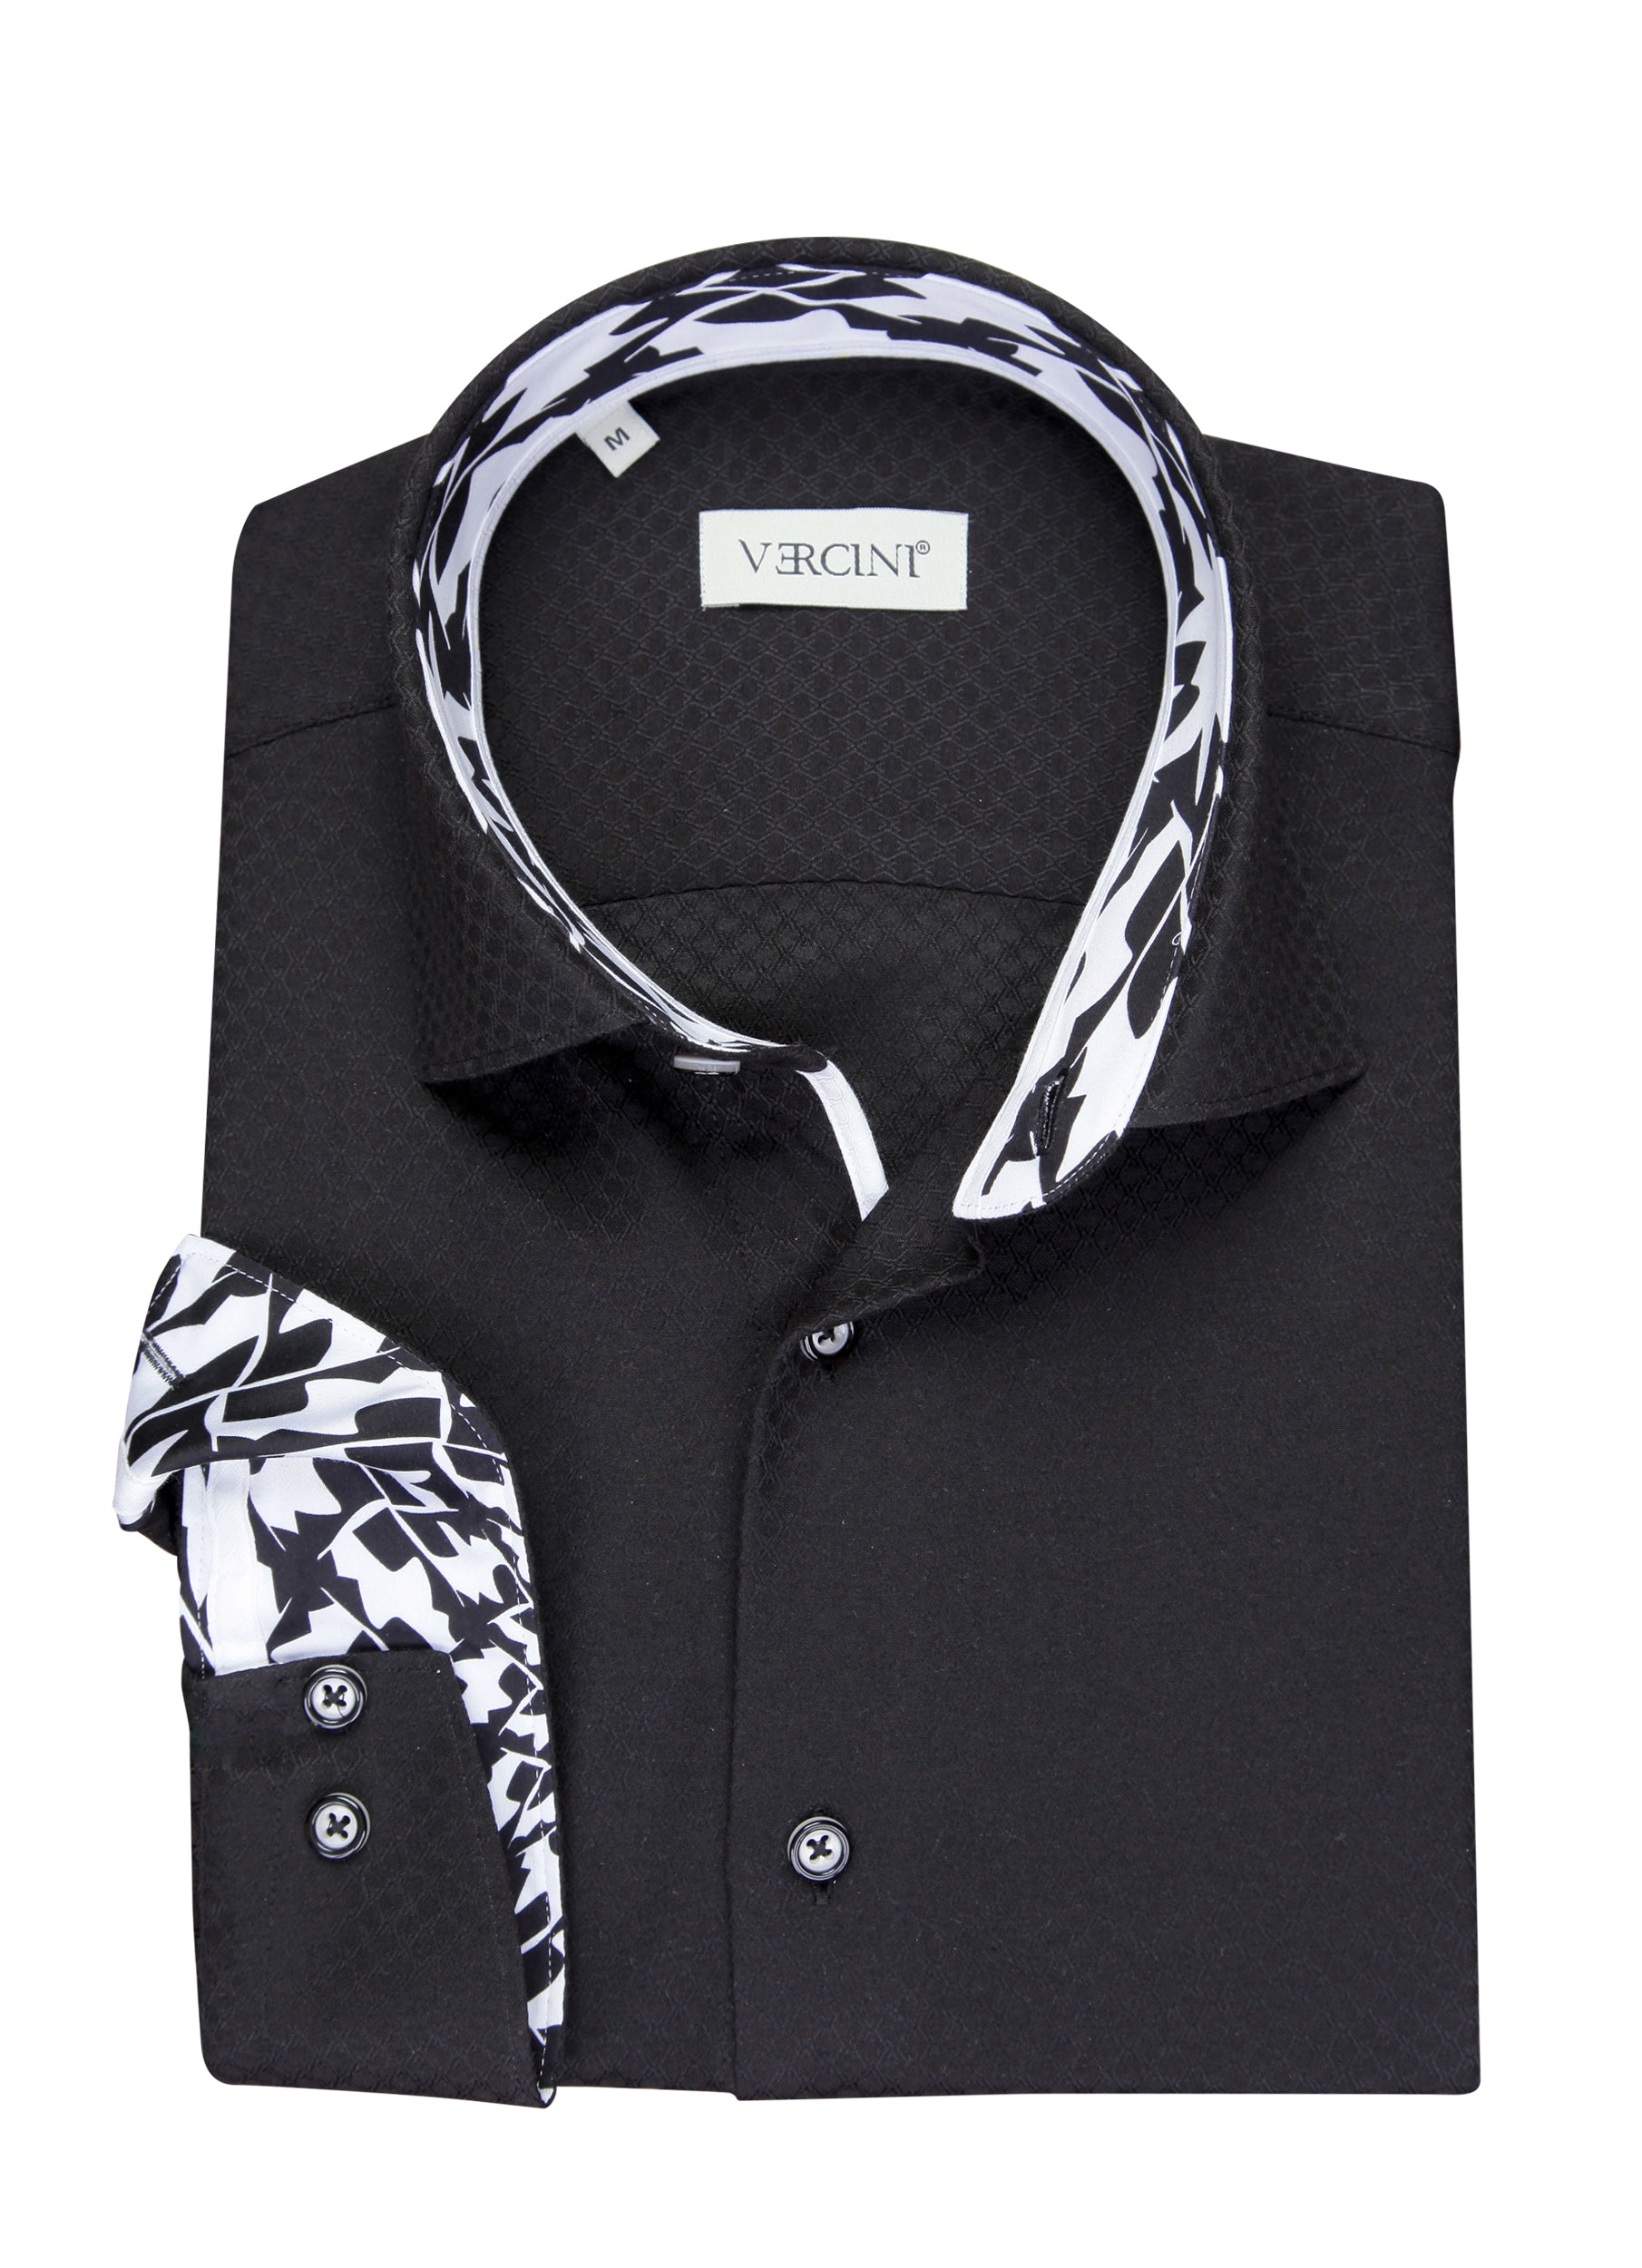 Black VERCINI shirt roses VERCINI COLLAR SHIRTS Casual Shirts Vercini